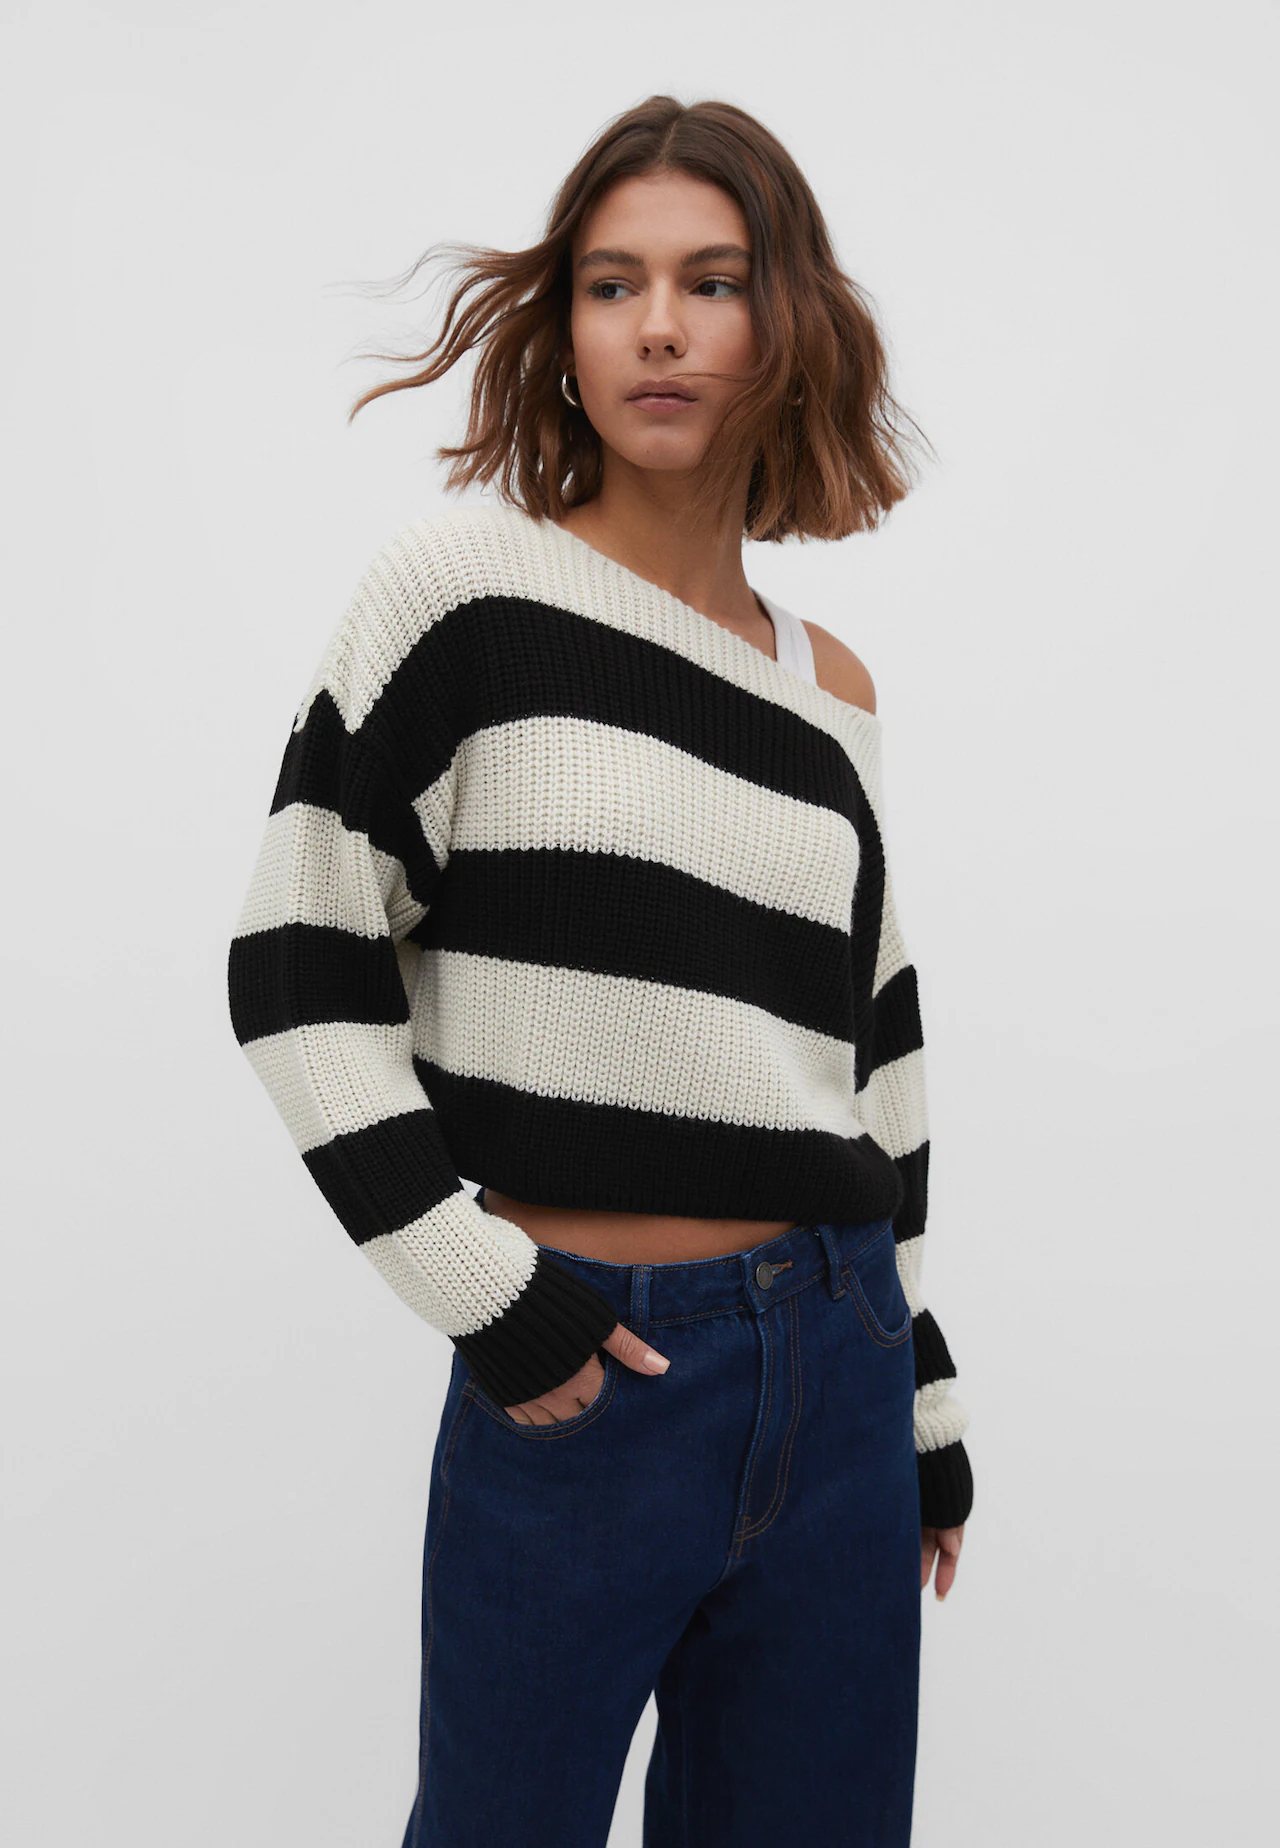 Striped knit jumper - Women's fashion